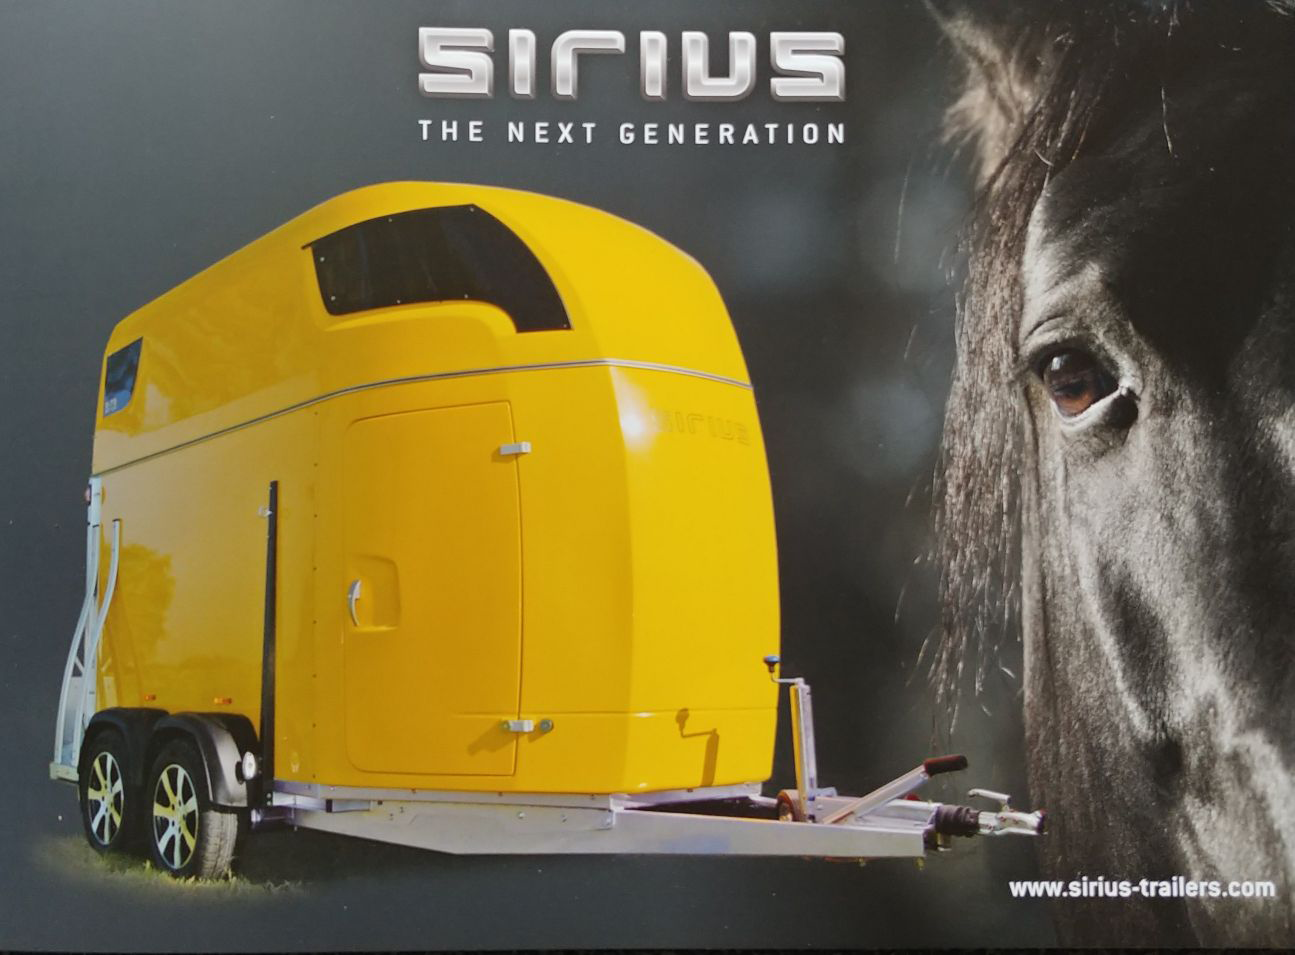 images/sponsor2/Logo Sirius.png